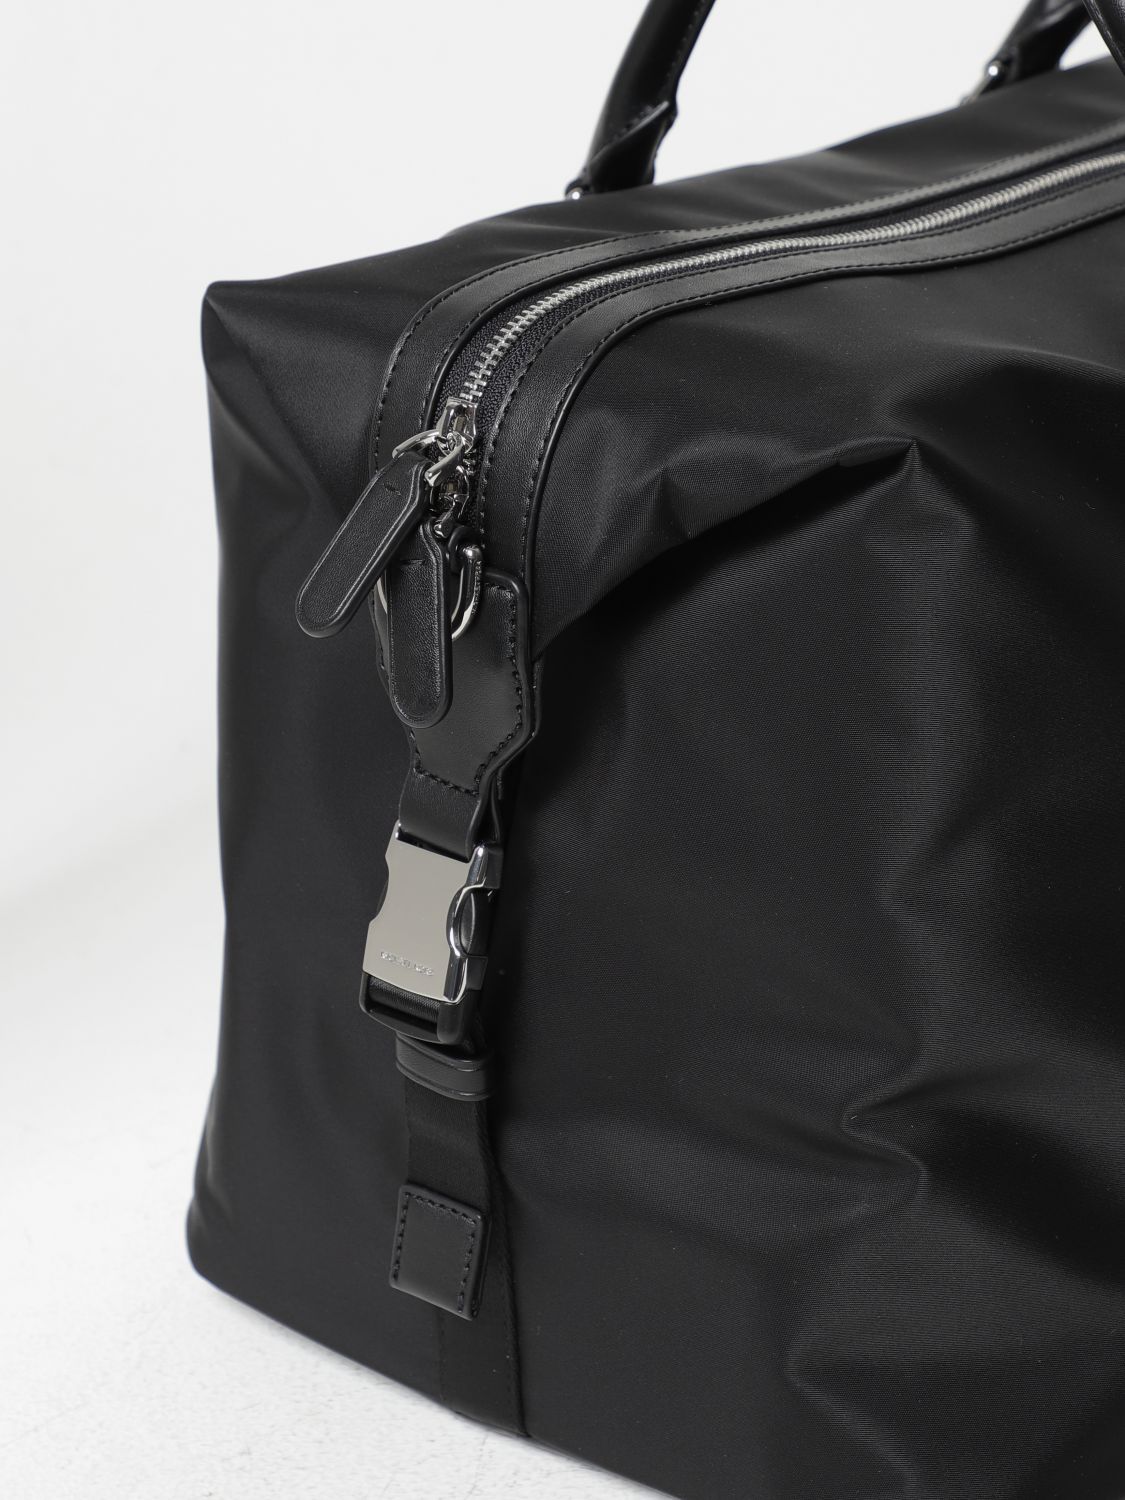 MICHAEL KORS: travel bag for man - Black  Michael Kors travel bag  33F3SBNU3B online at